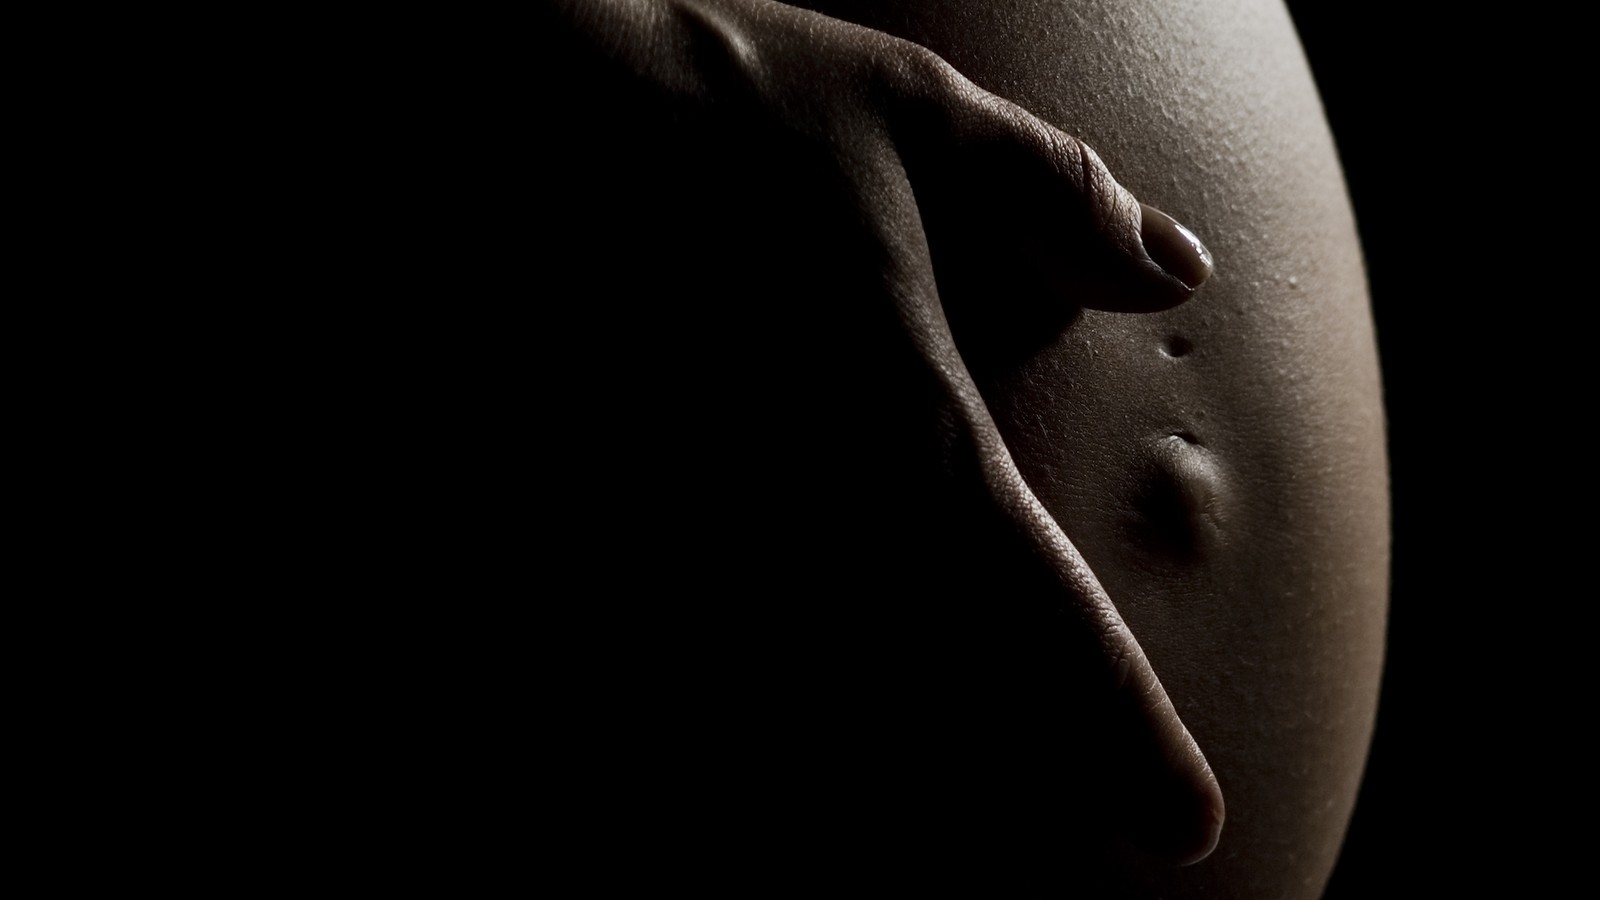 In Defense of Saying 'Pregnant Women' - The Atlantic